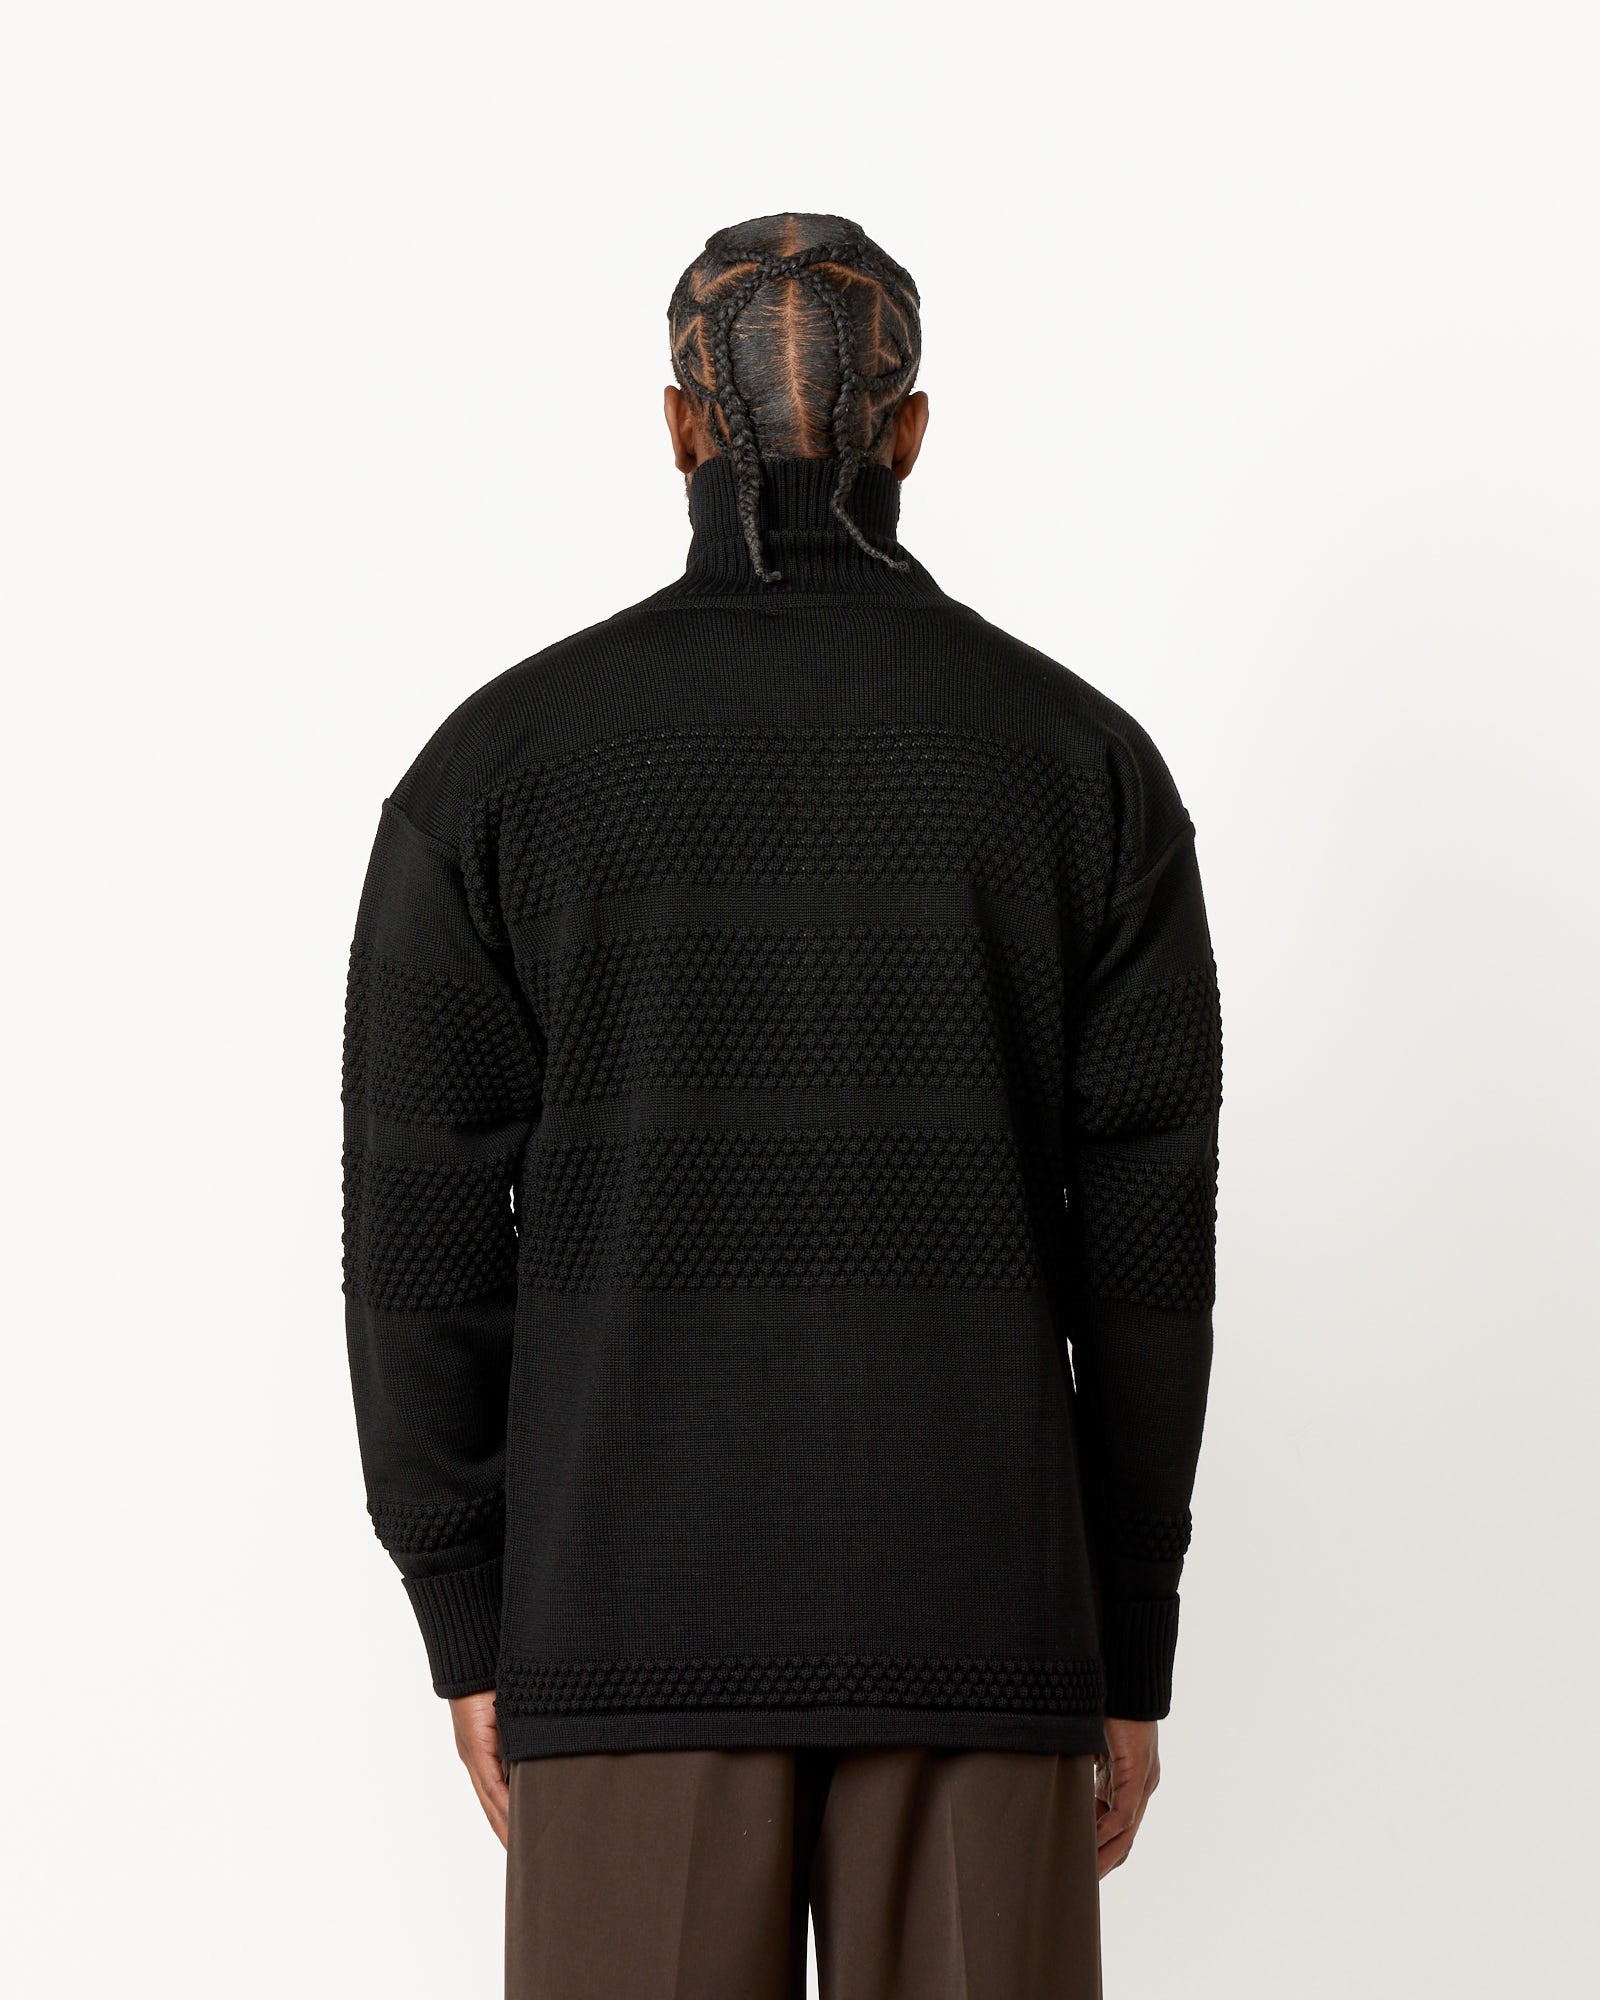 Fisherman Full Zip Sweater in Black Void